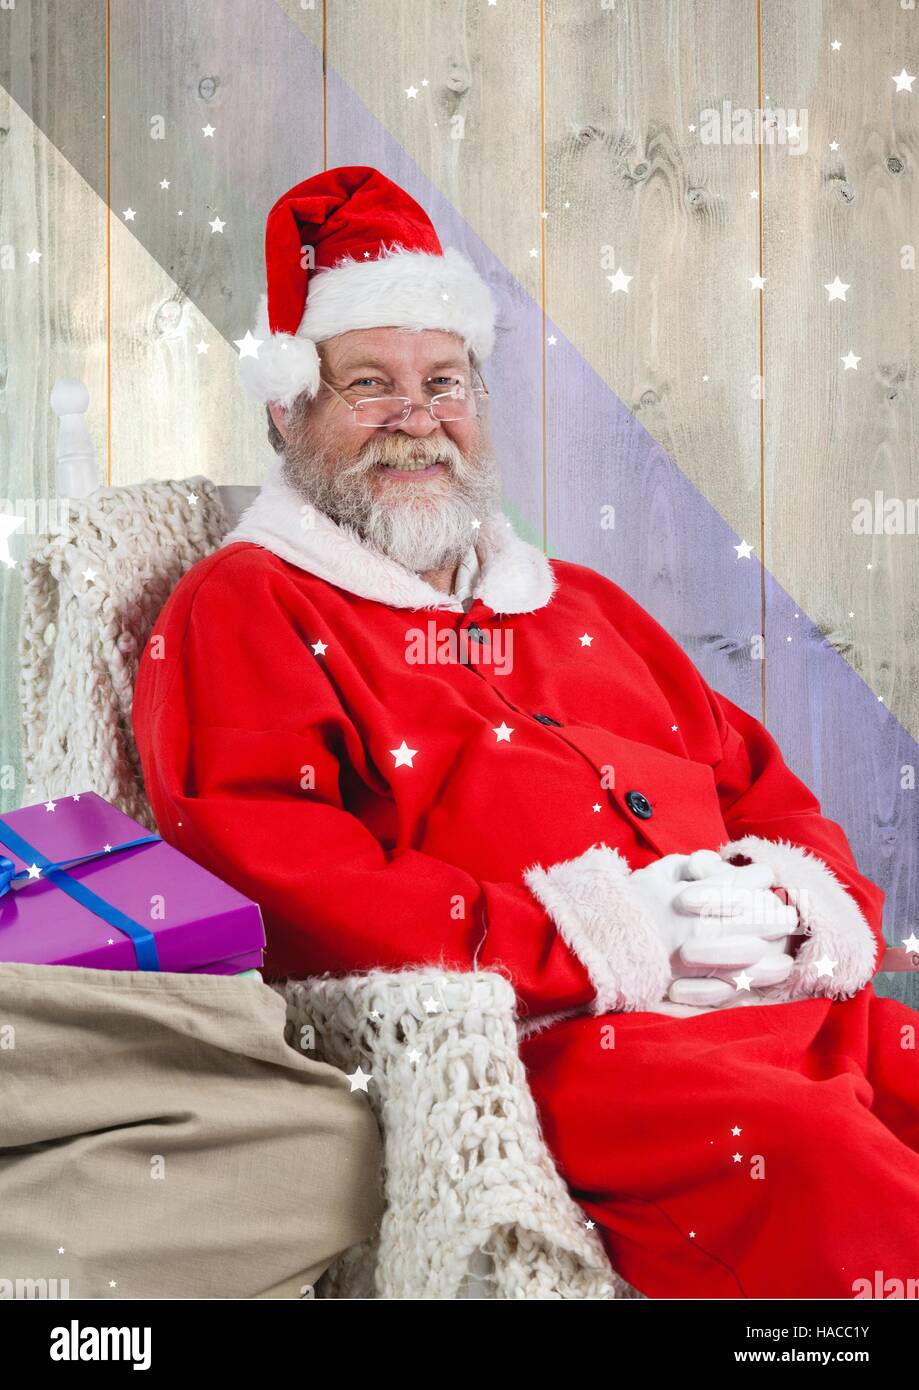 Smiling santa claus sitting with gift sack Stock Photo